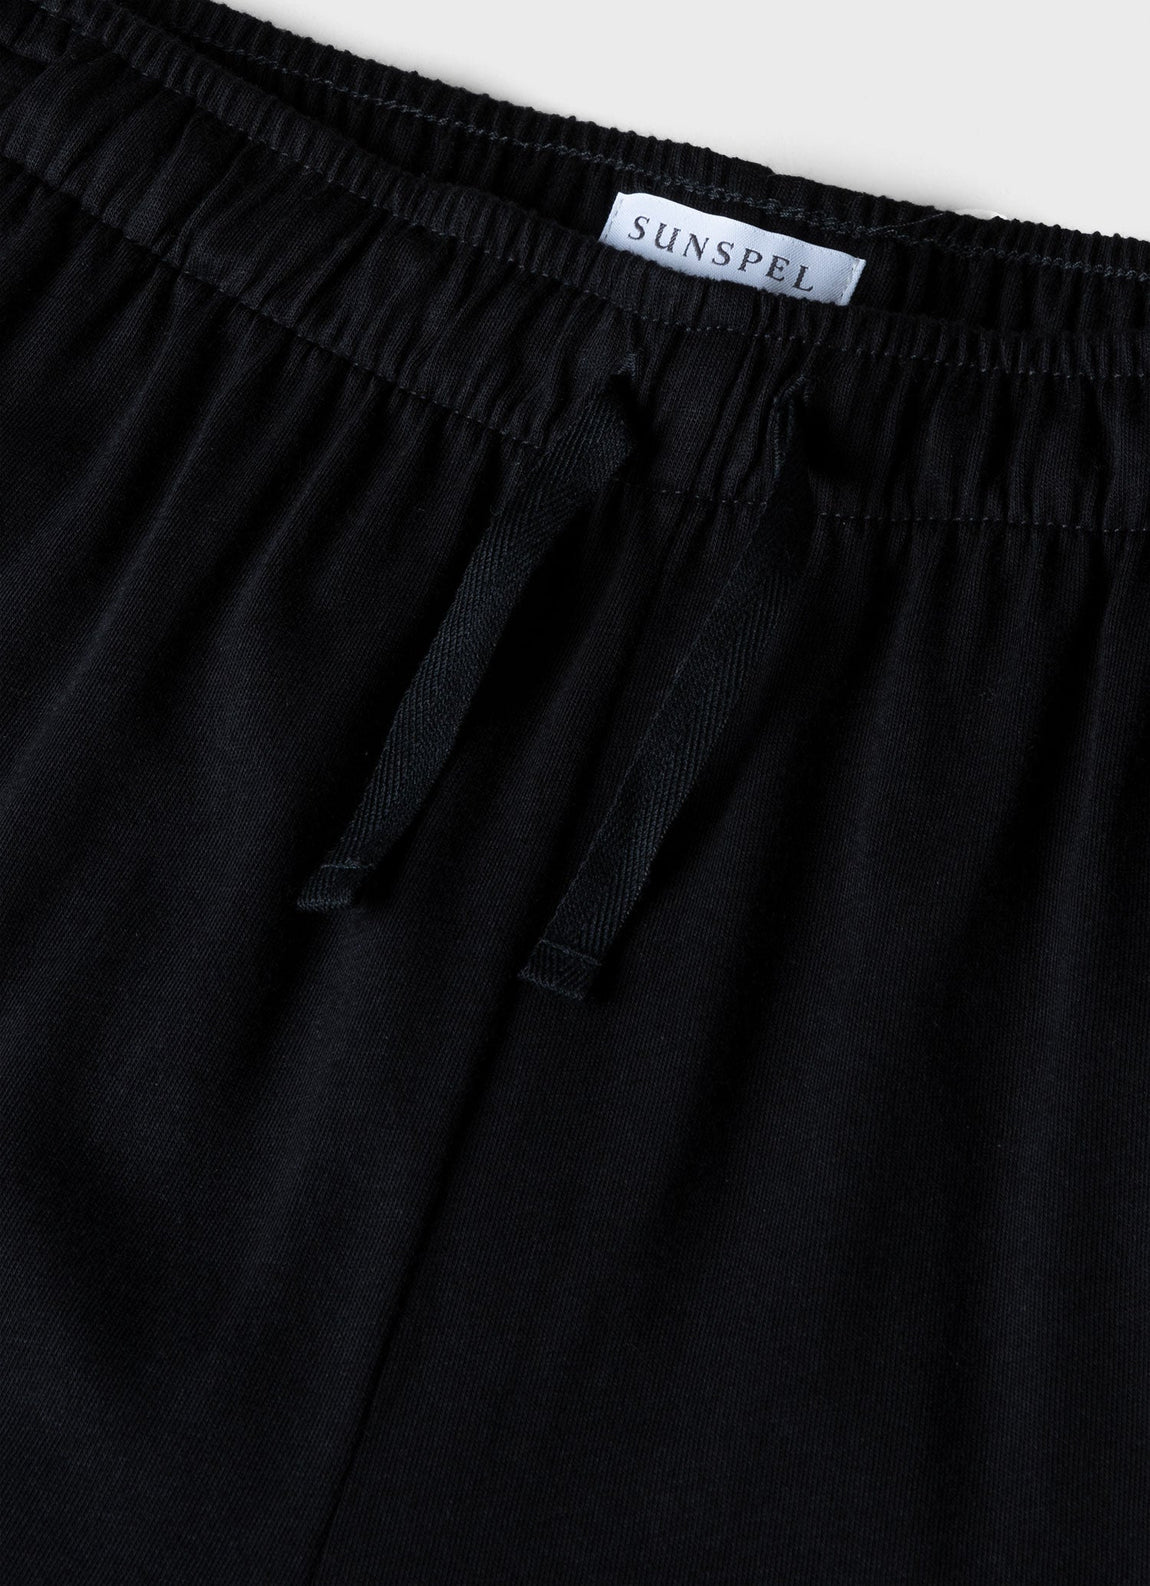 Men's Cotton Modal Lounge Shorts in Black